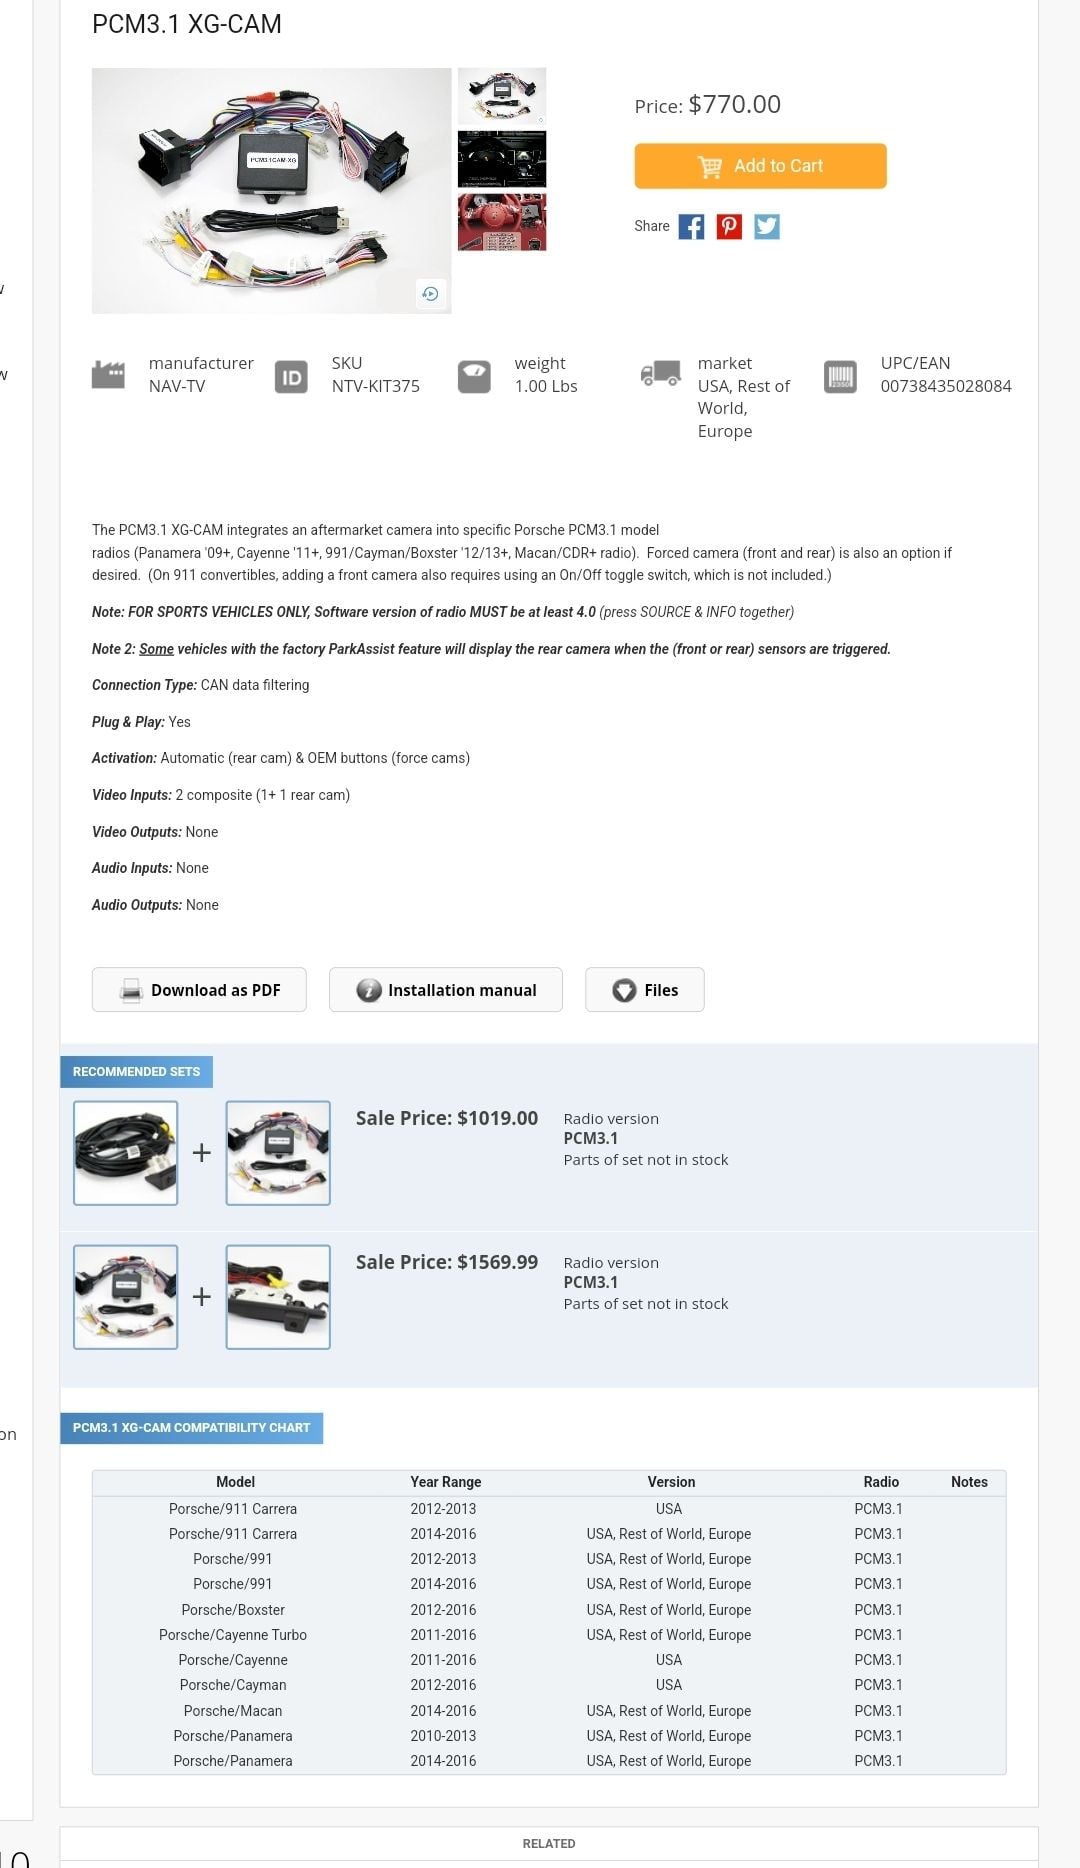 Audio Video/Electronics - GTA Car Kits Wireless Carplay and Android/Cam Integration  Porsche 911/991 2012-2016 - Used - Treasure Island, FL 33706, United States